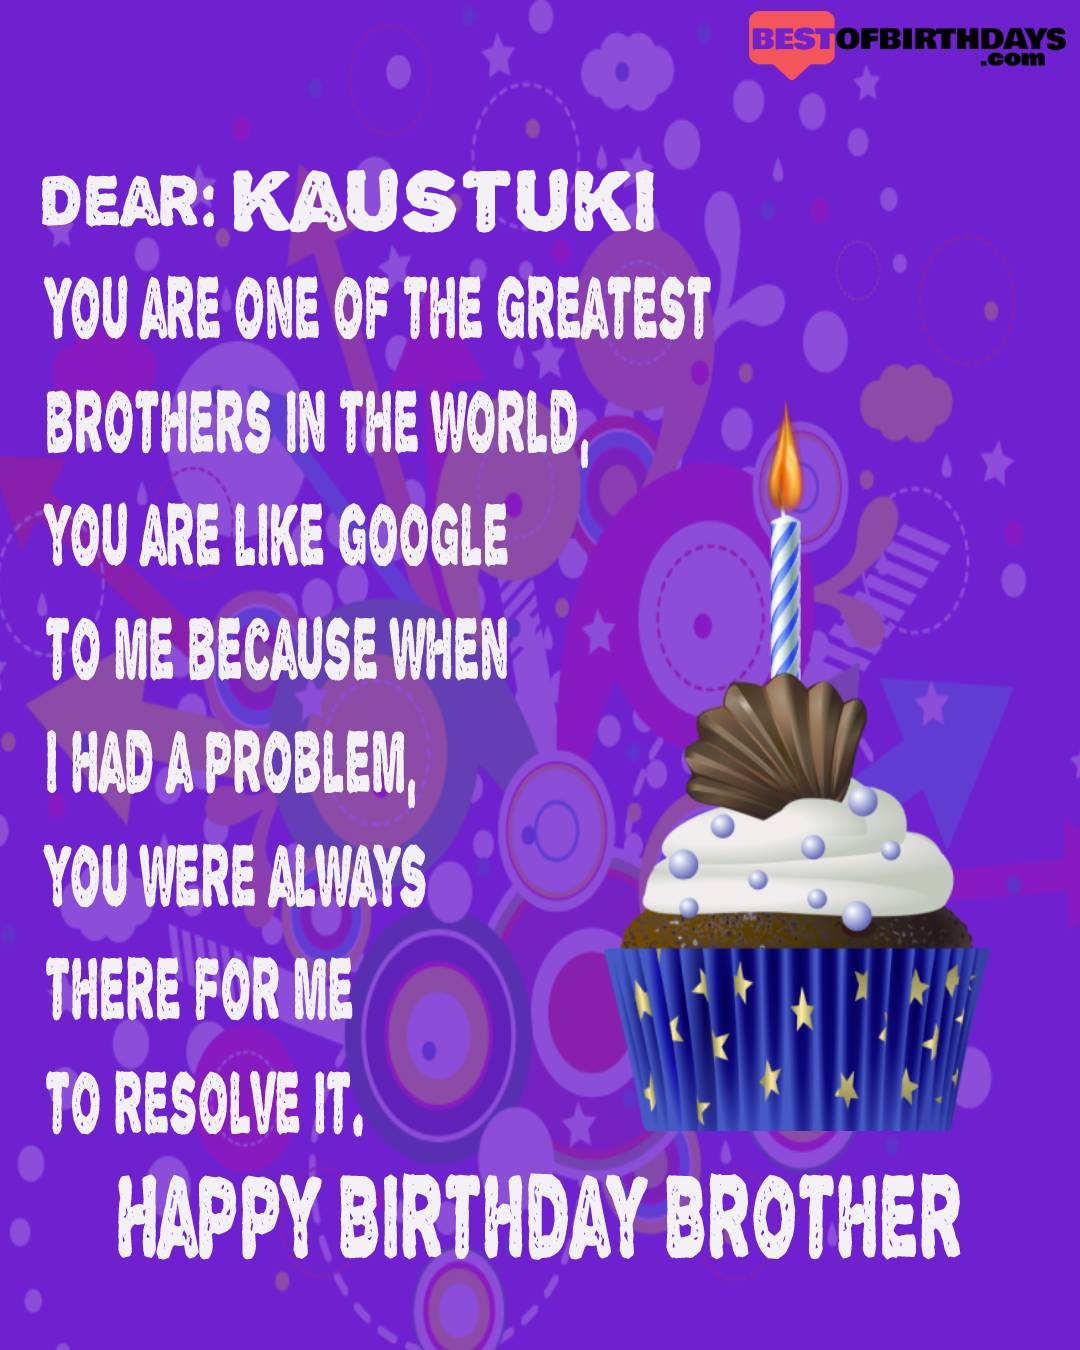 Happy birthday kaustuki bhai brother bro